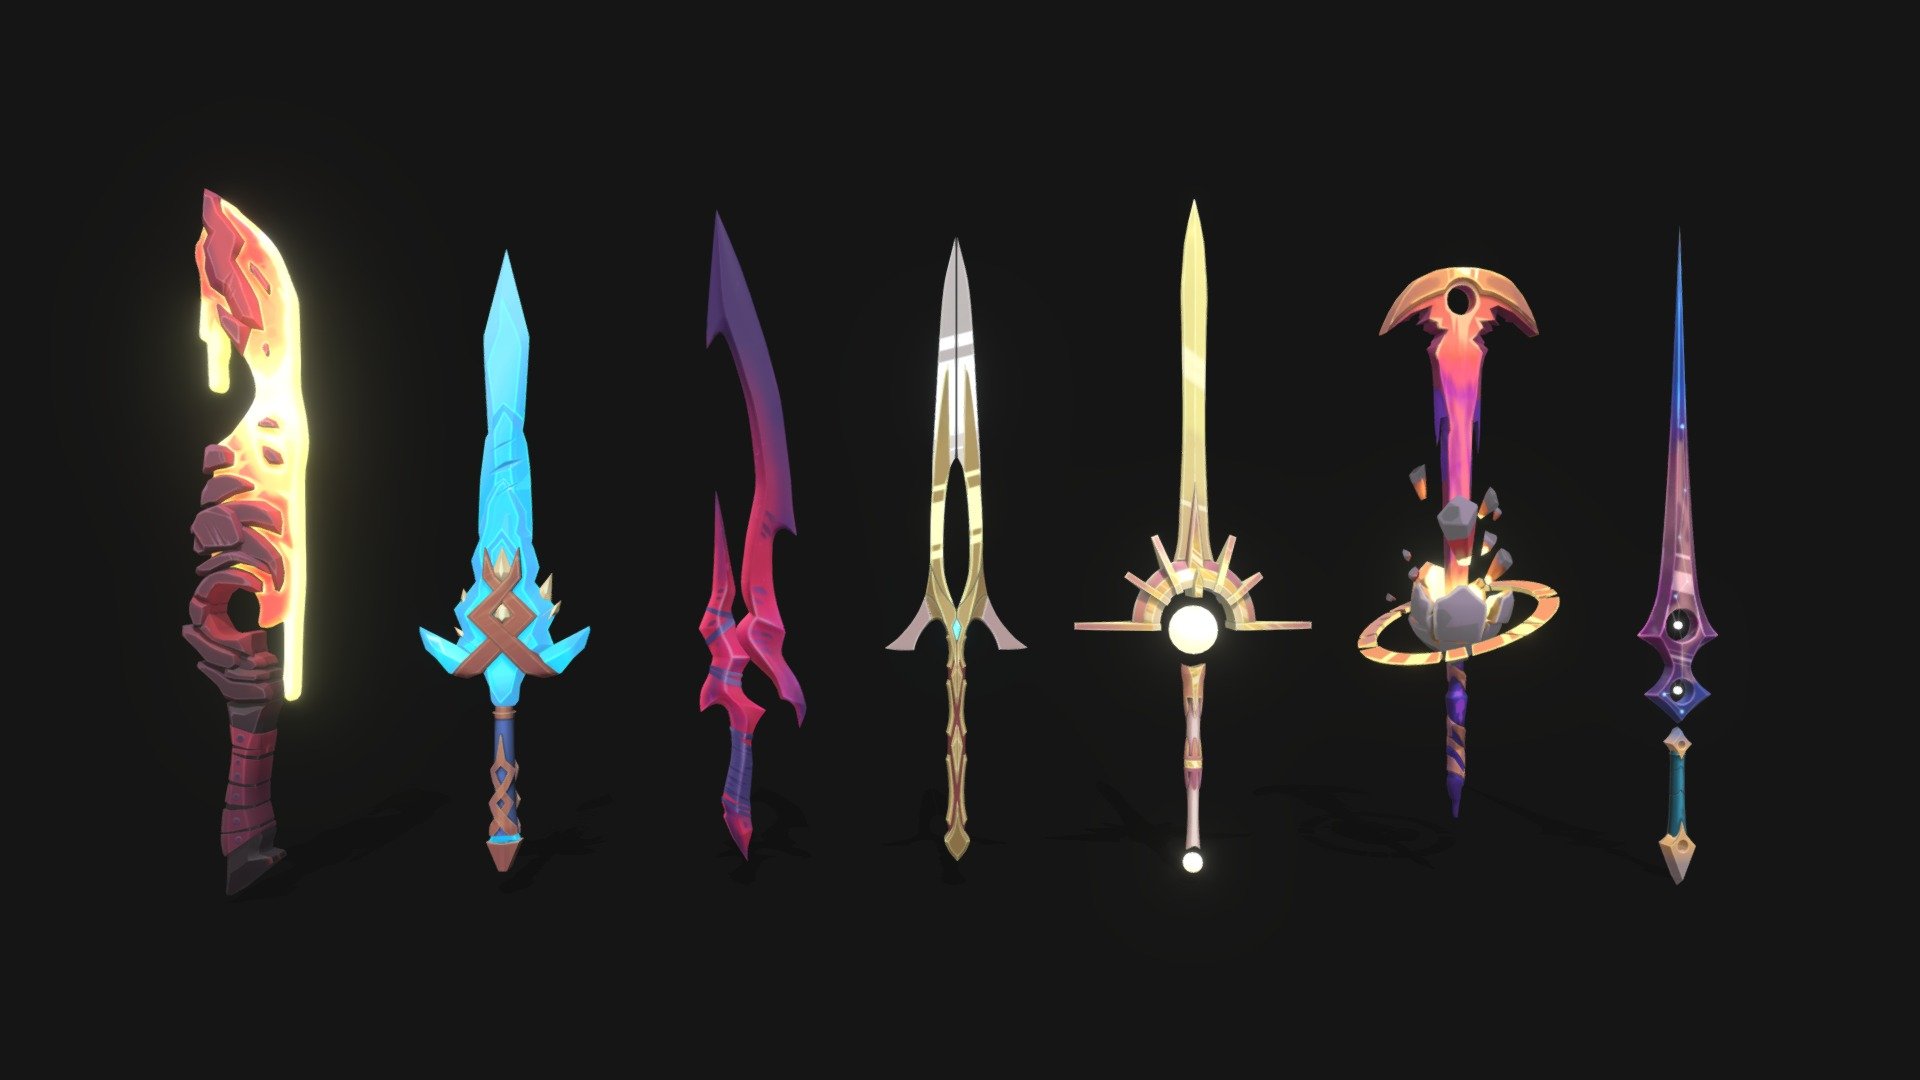 Elemental Swords Mod 